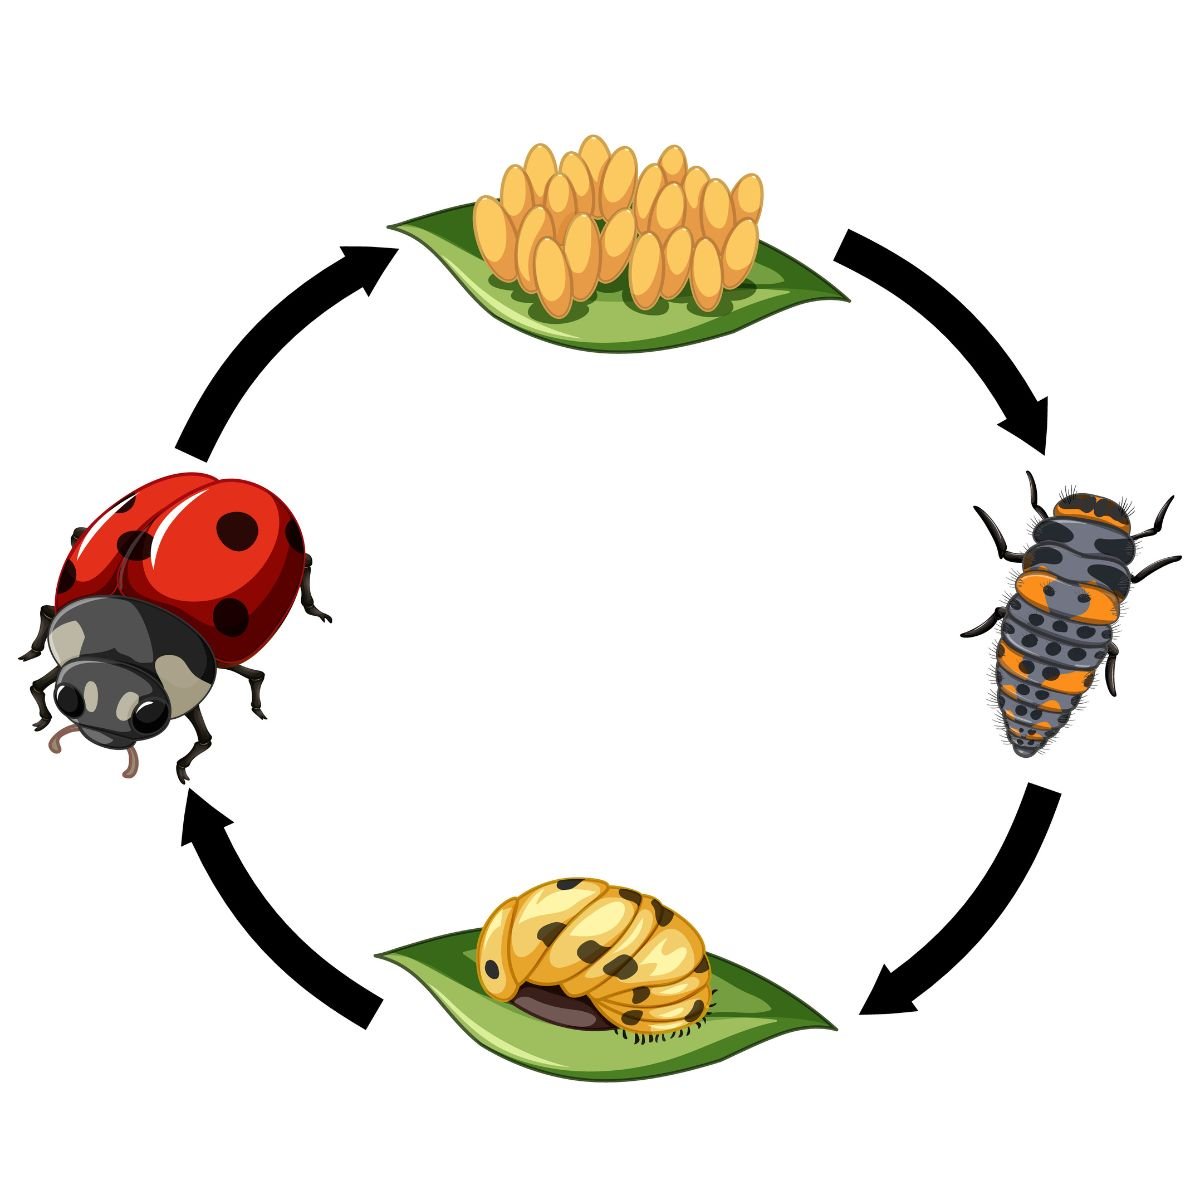 beetles life Cycle